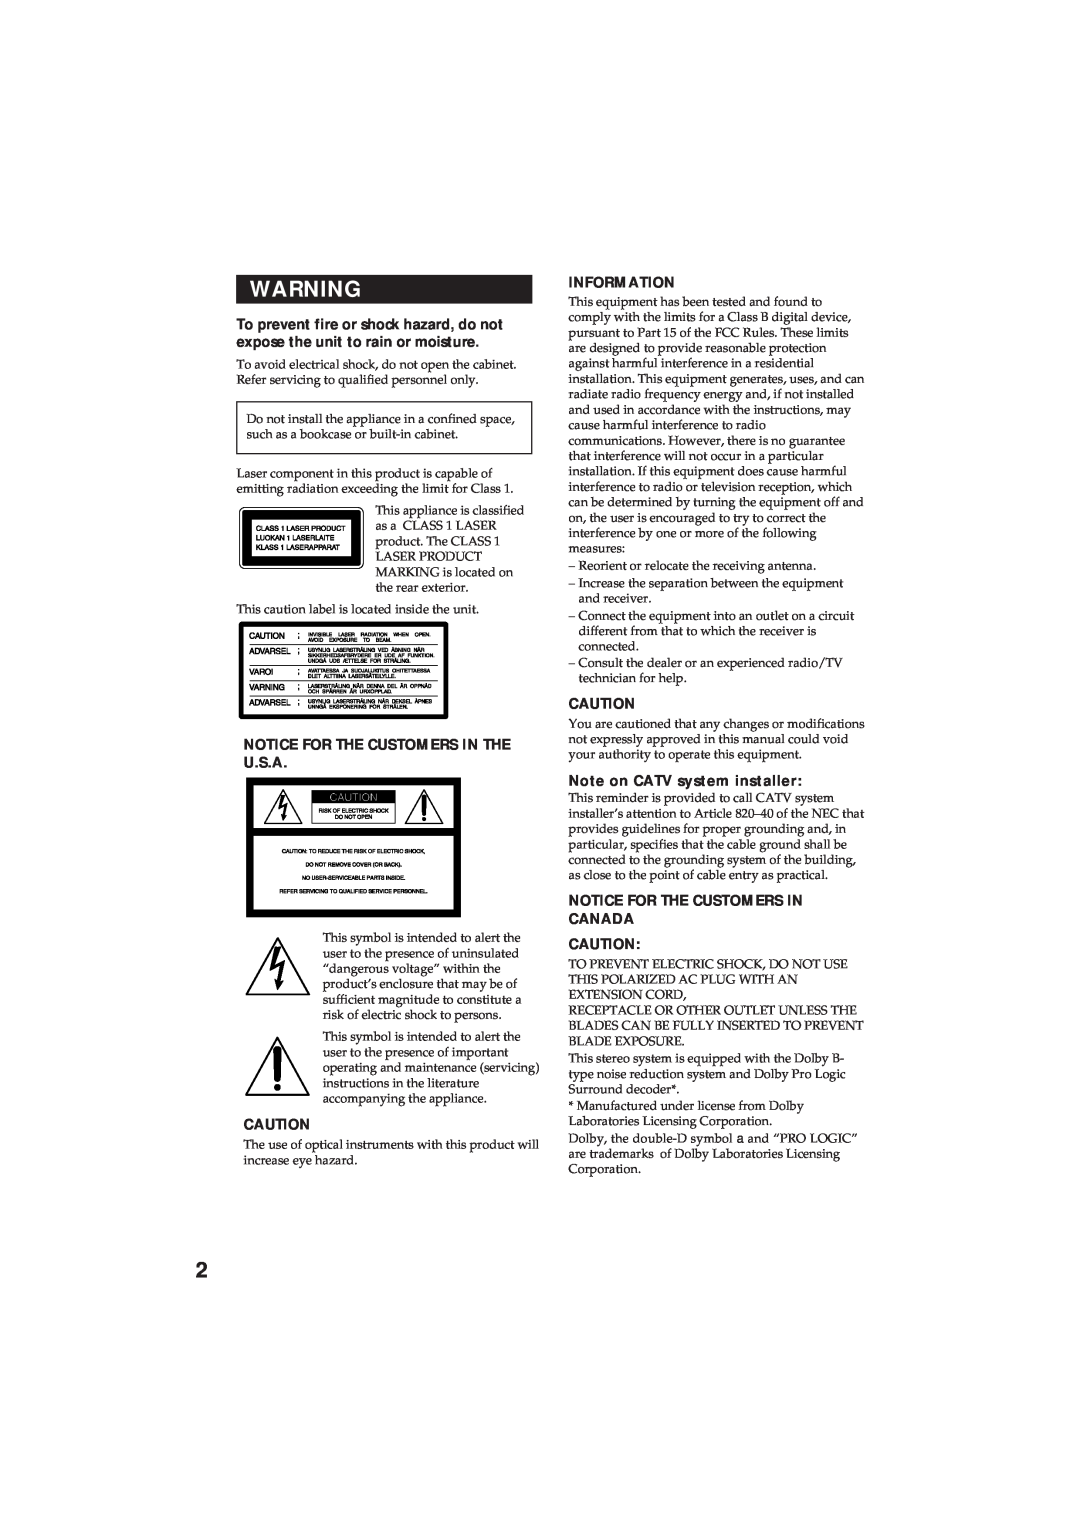 Sony MHC-GR10AV, MHC-D90AV Notice For The Customers In The U.S.A, Information, Note on CATV system installer 